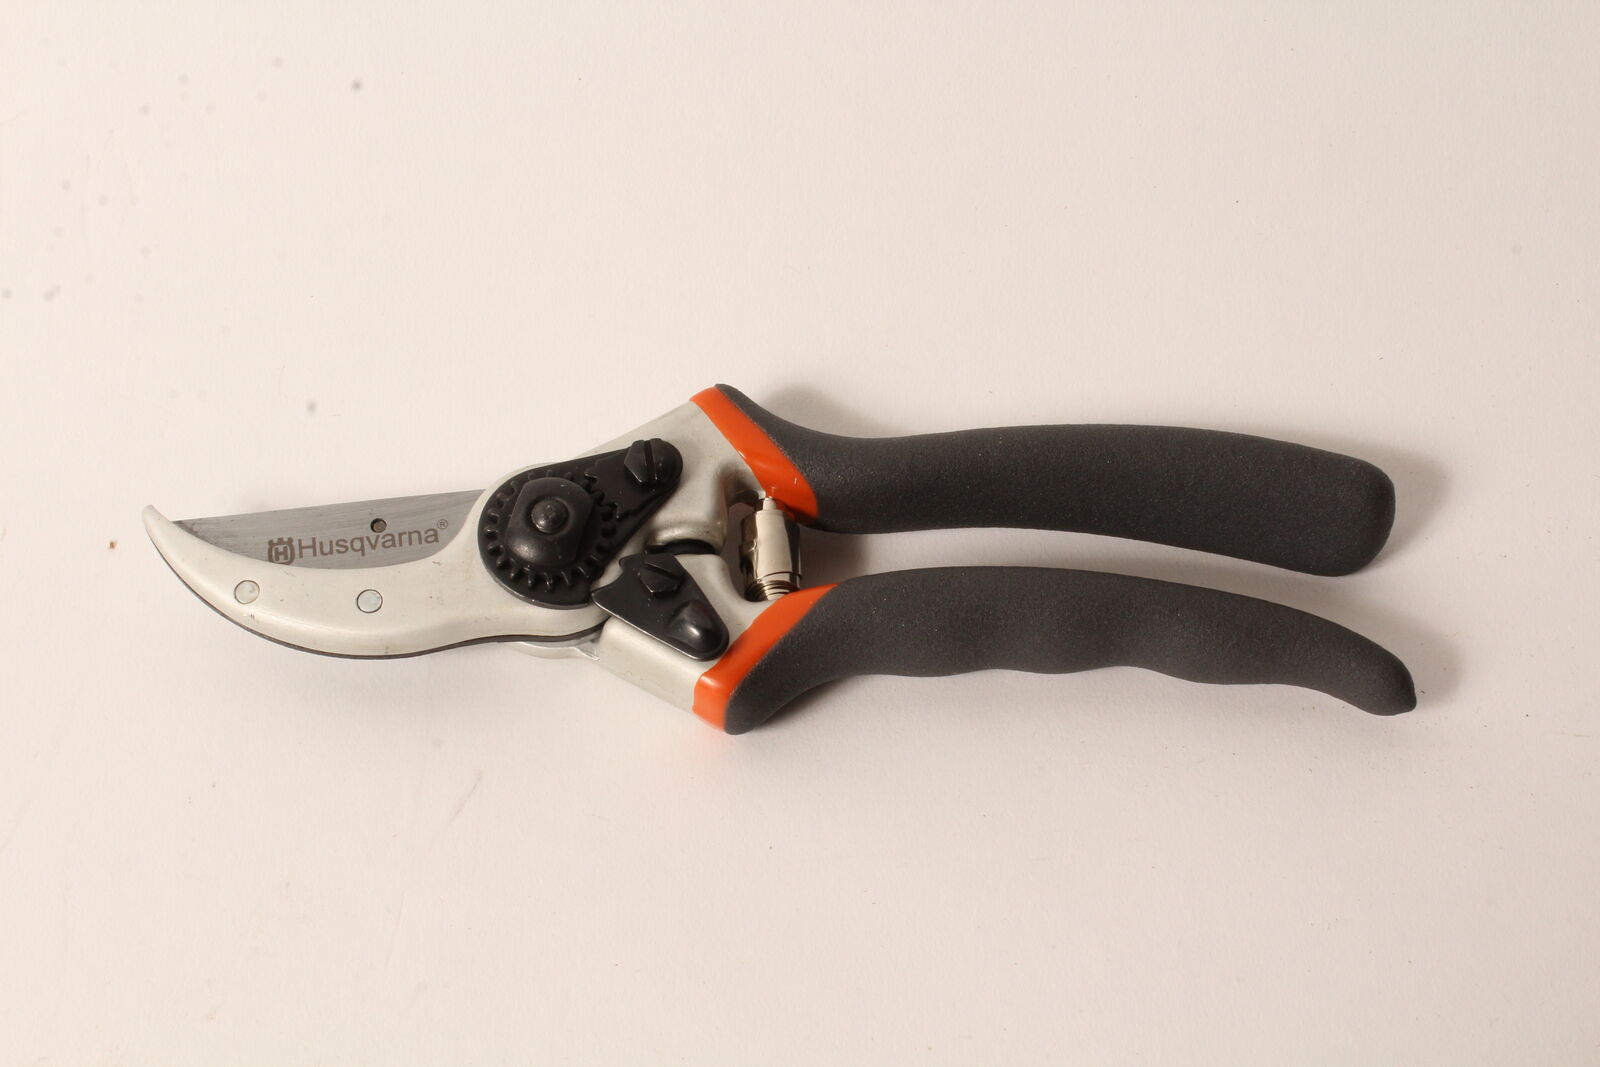 Genuine Husqvarna 599633201 Technical Hand Pruner High Carbon Alloy Steel Blade